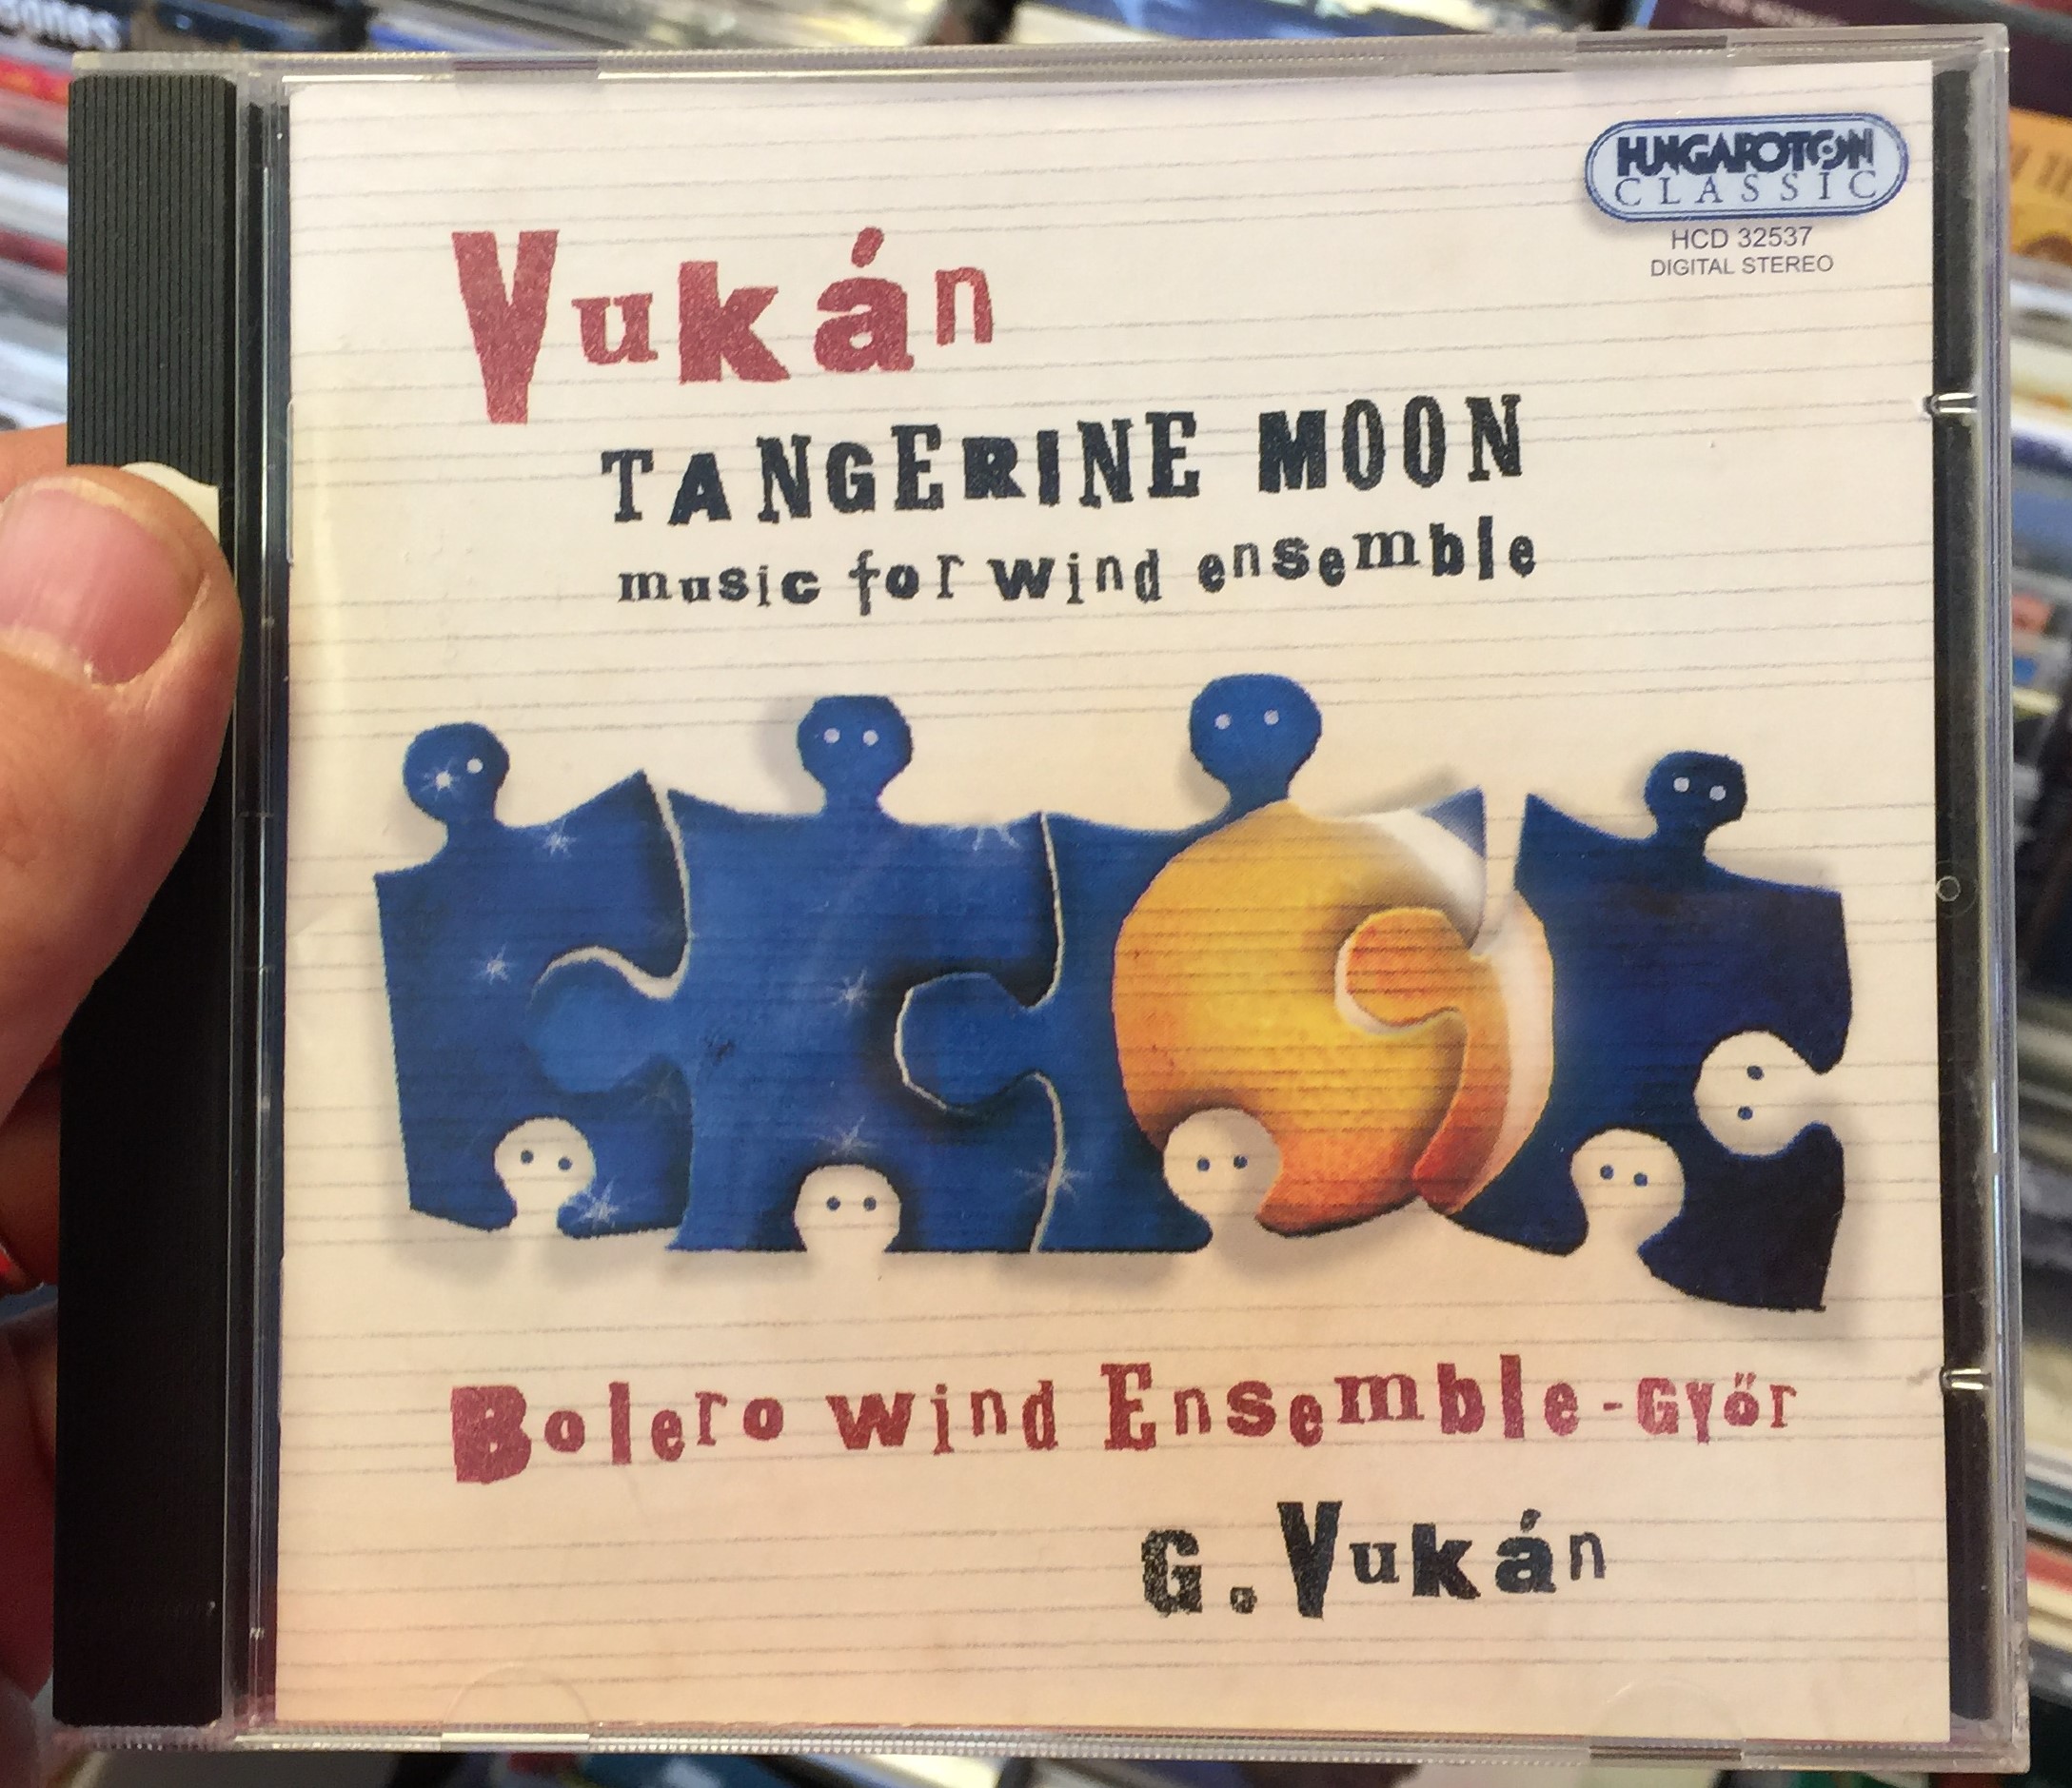 vukan-tangerine-moon-music-for-wind-ensemble-bolero-wind-ensemble-gyor-g.-vukan-hungaroton-classic-audio-cd-2007-stereo-hcd-32537-1-.jpg